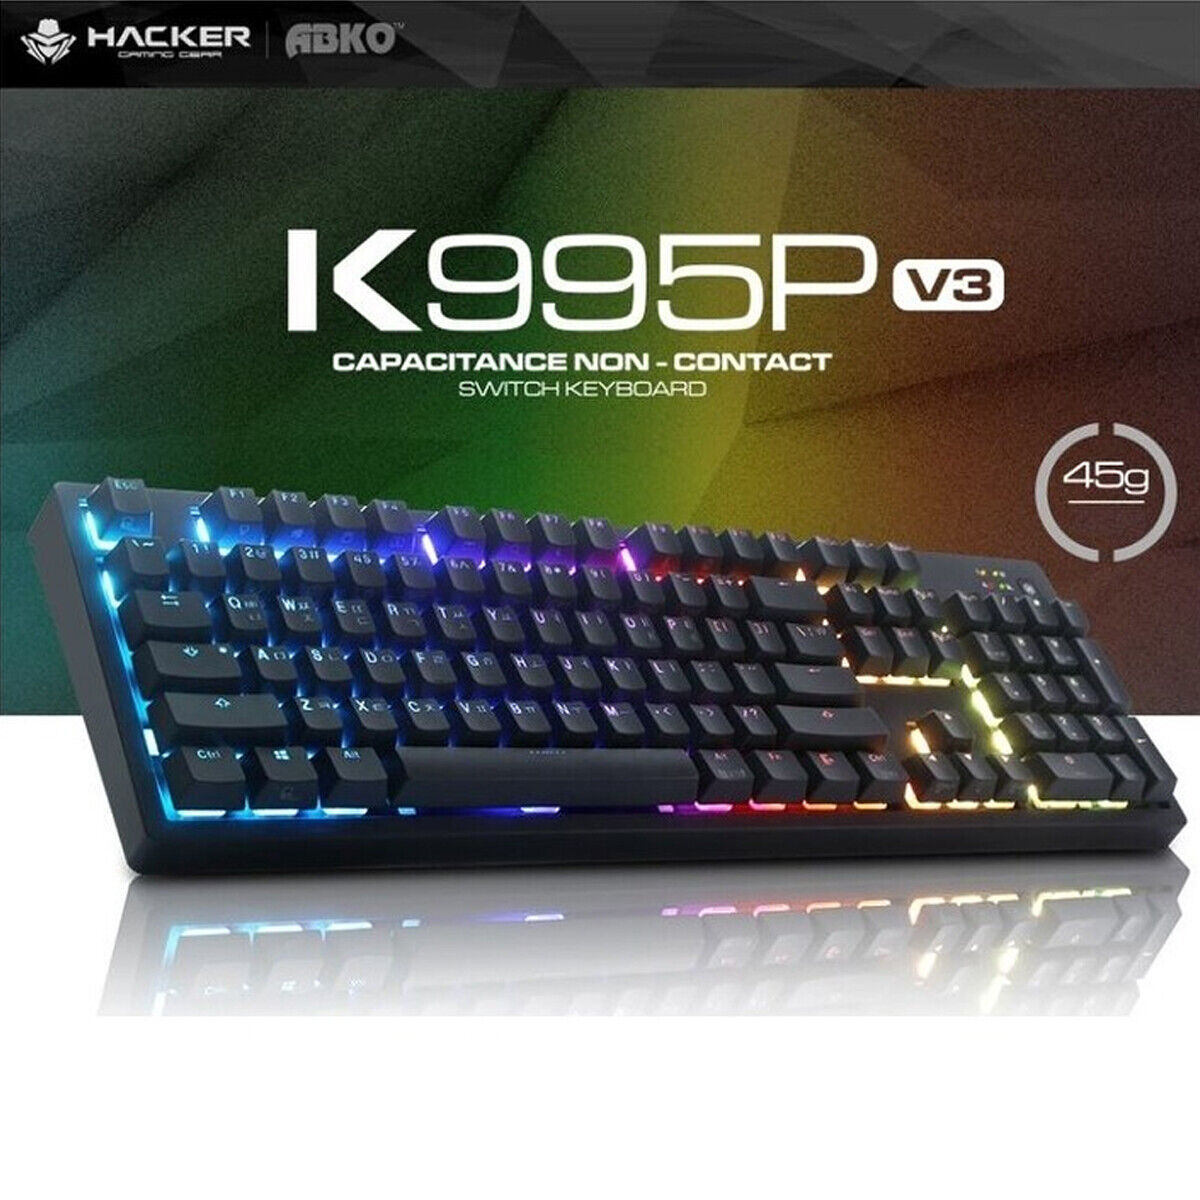 ABKO K995P V3 Electro-Capacitive RGB   Mechanical ANTI SPILL GAMING Keyboard 